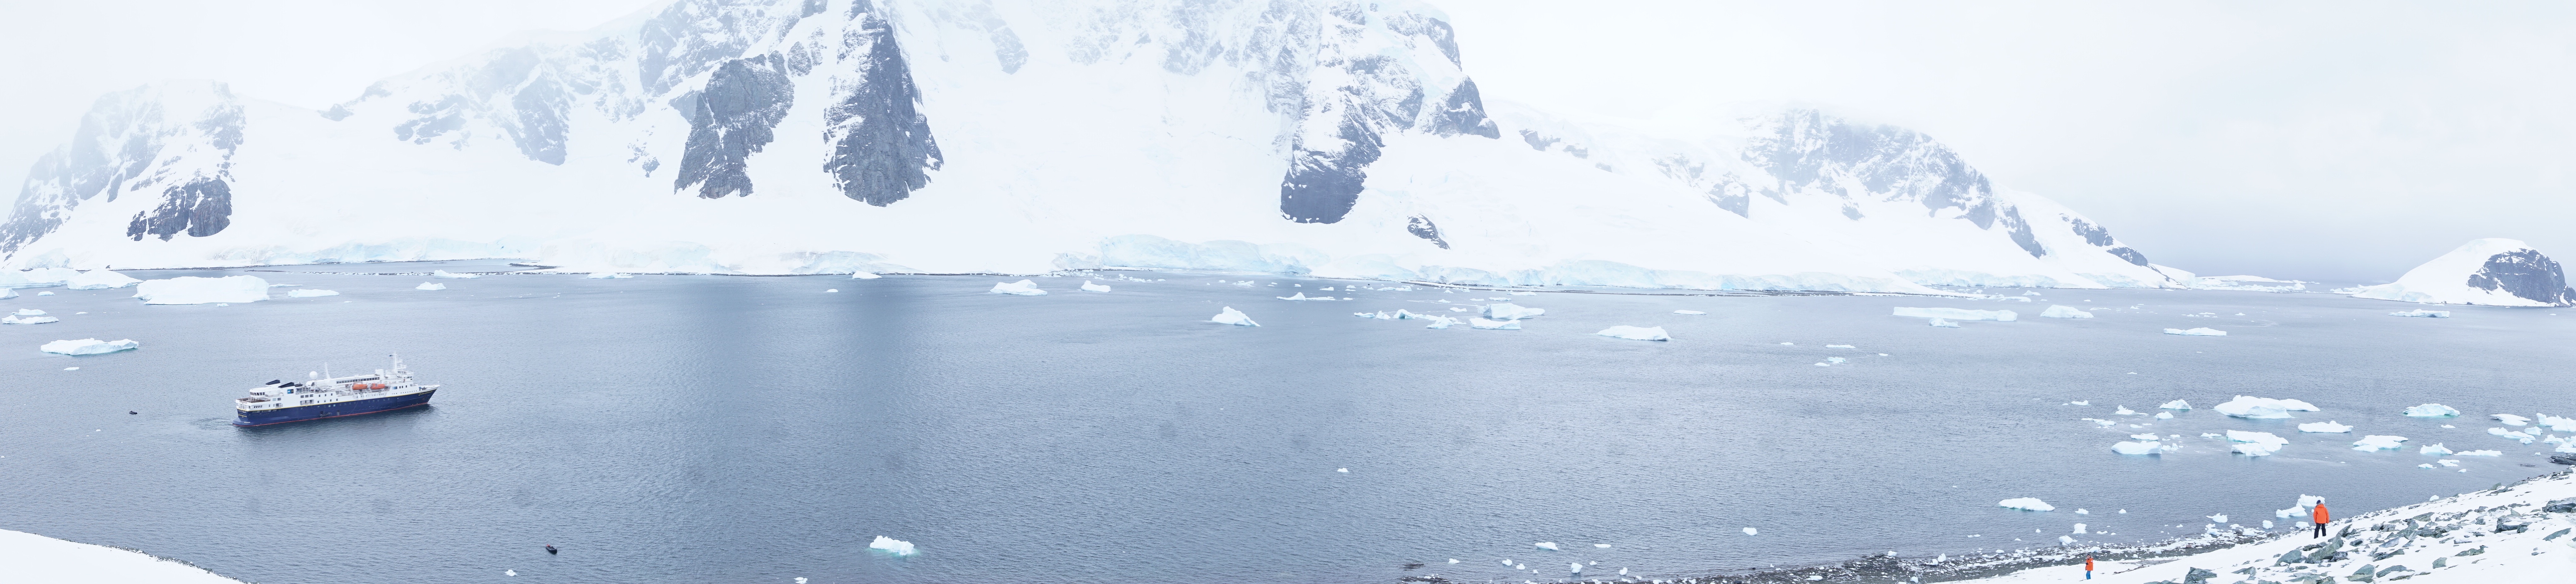 AntarcticaBlog.jpg